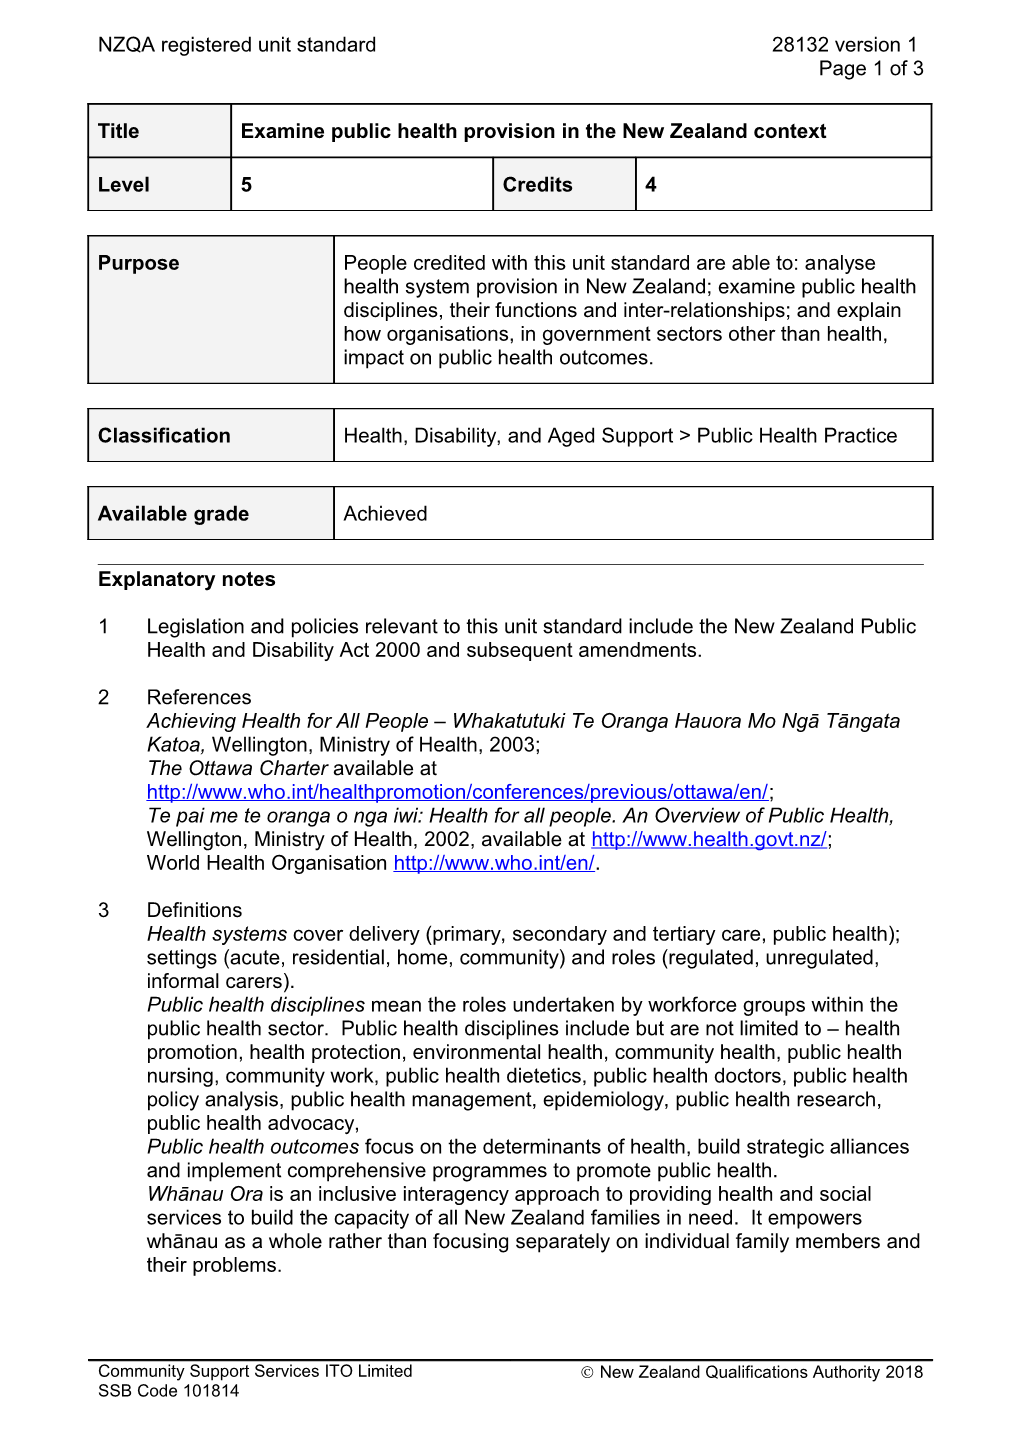 28132 Examine Public Health Provision in the New Zealand Context